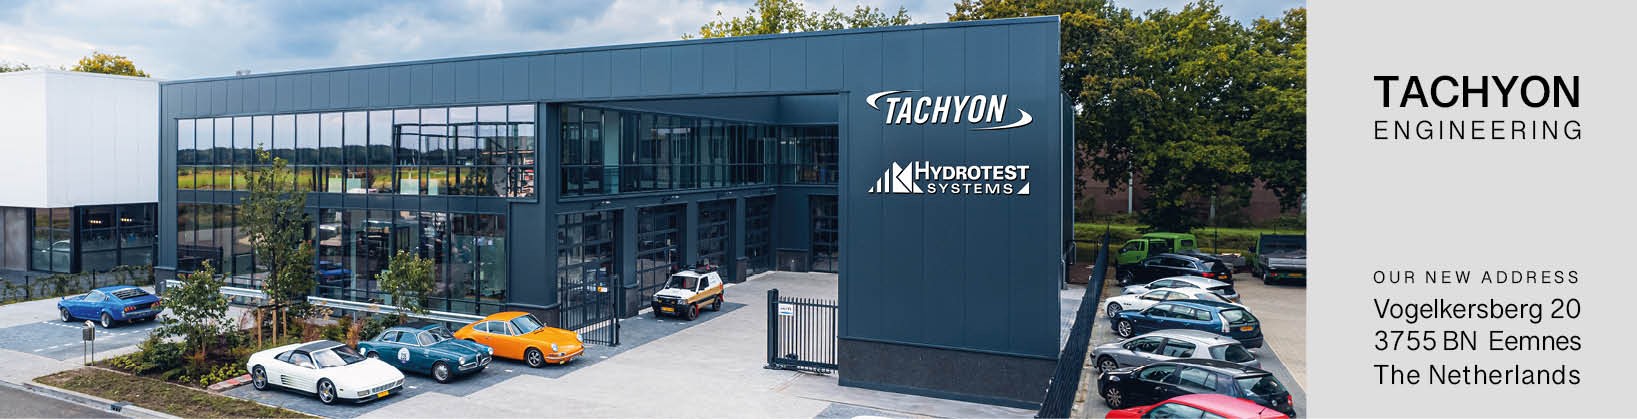 Tachyon Engineering